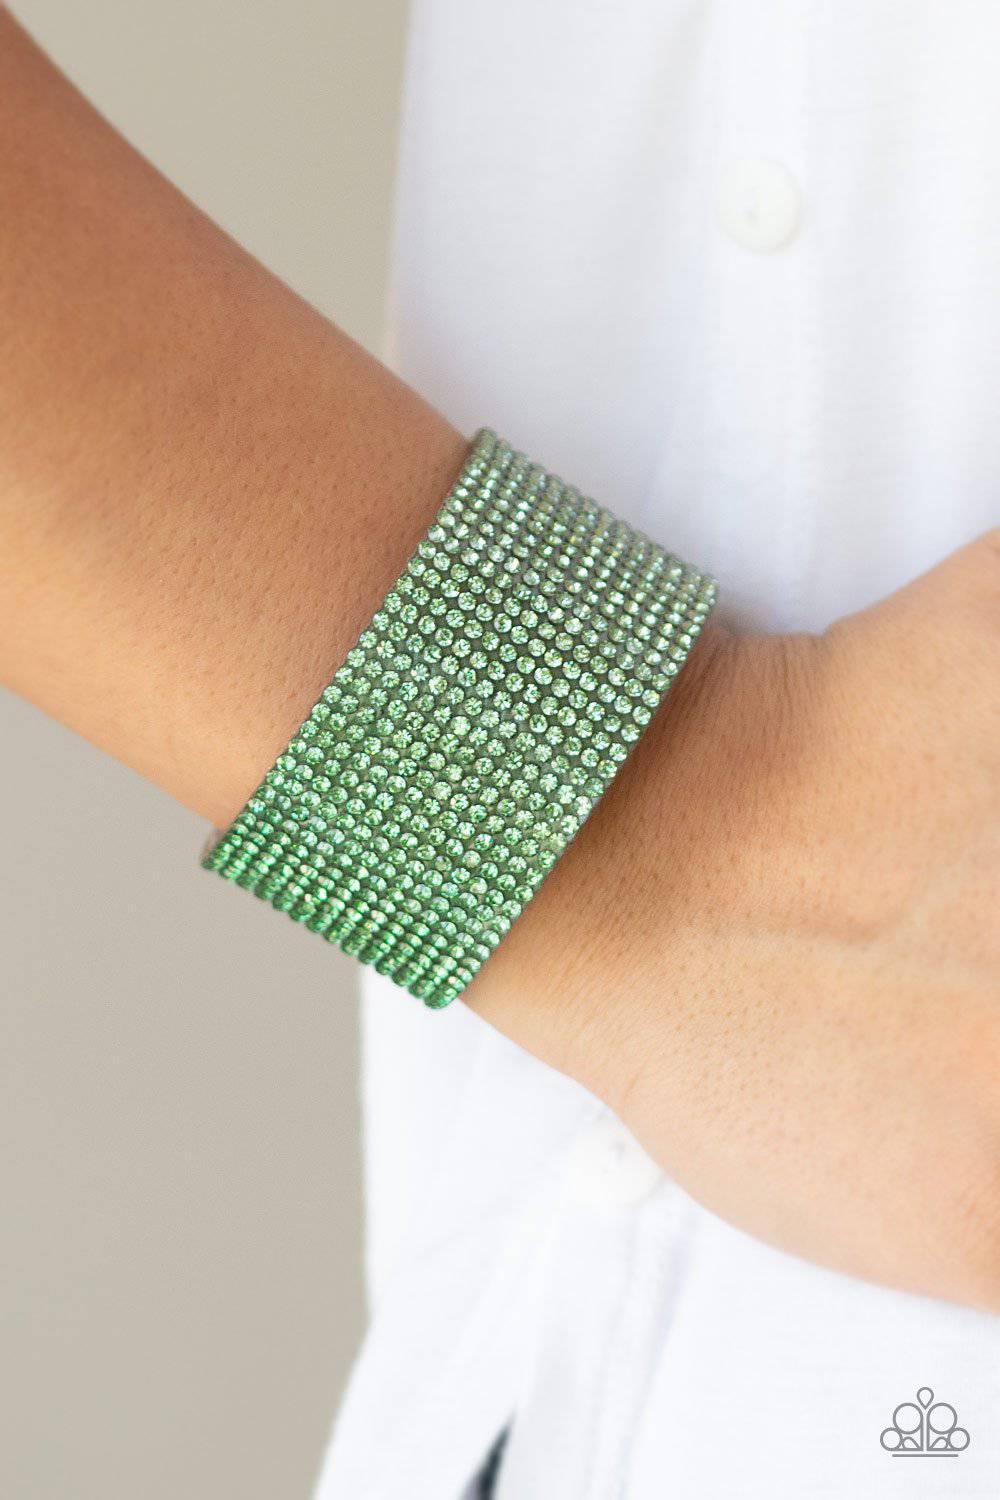 Fade Out - Green Rhinestone Wrap Bracelet - Paparazzi Accessories - GlaMarous Titi Jewels